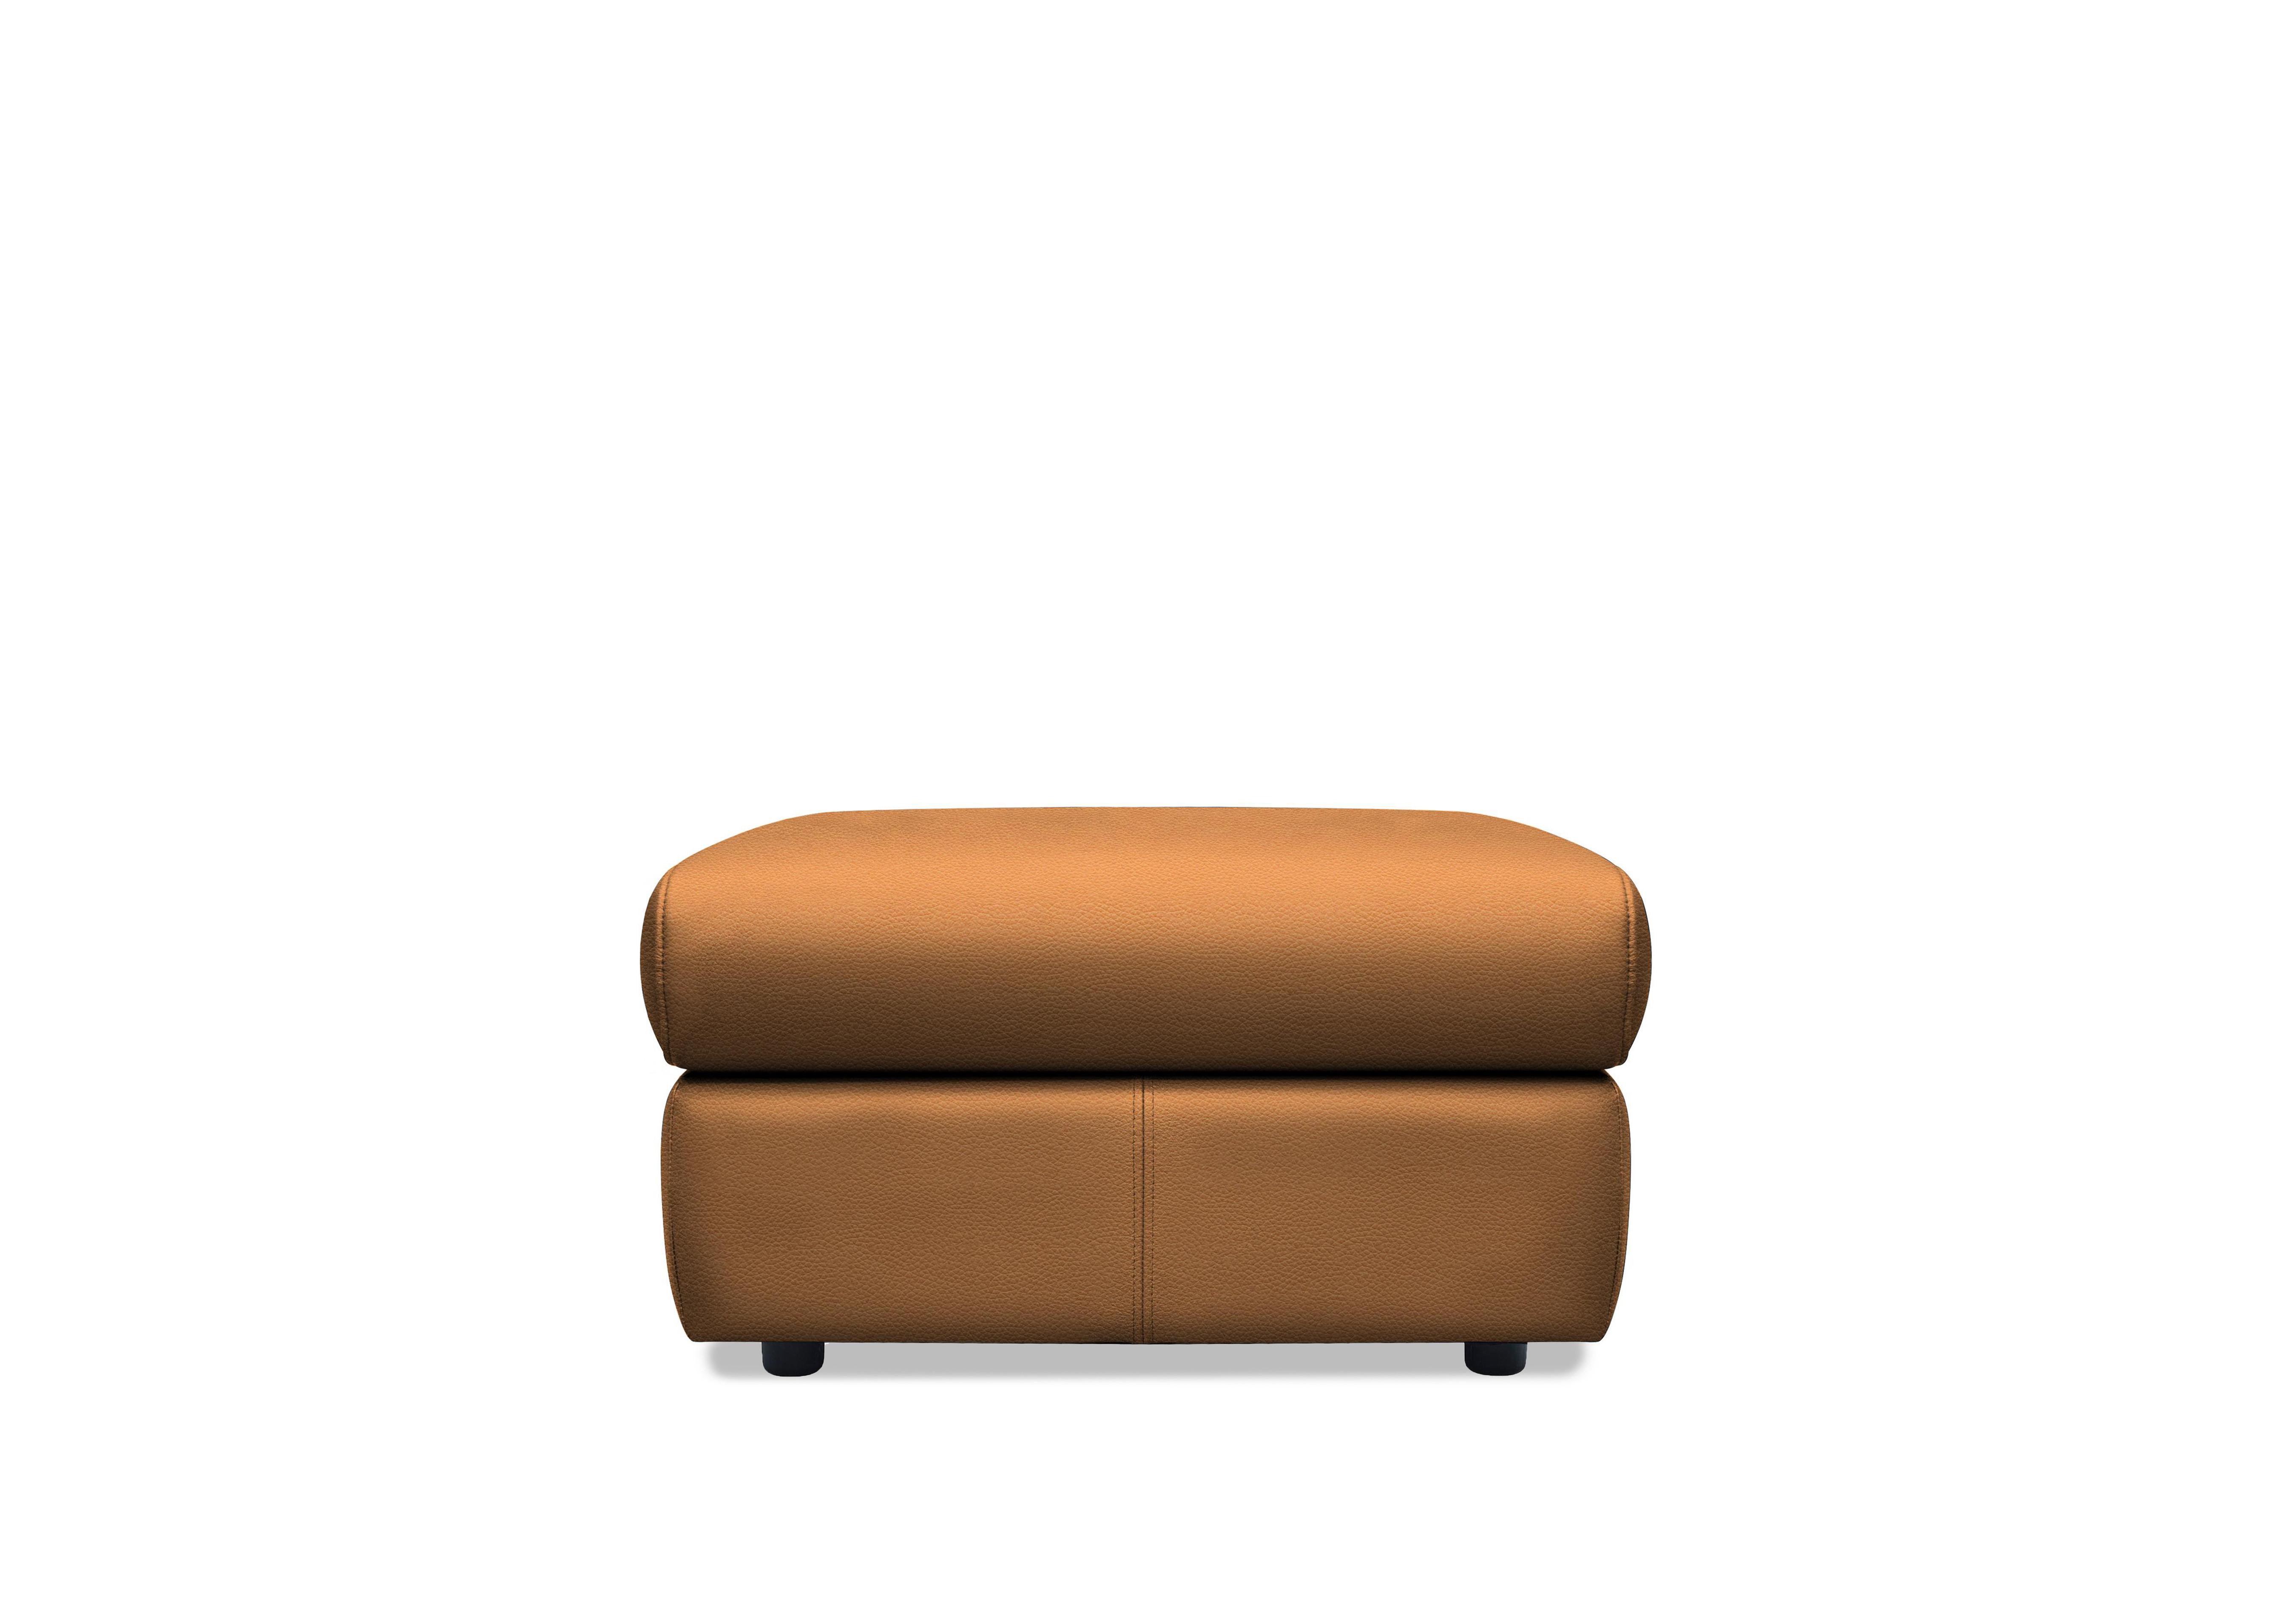 Thornbury Leather Footstool in L847 Cambridge Tan on Furniture Village